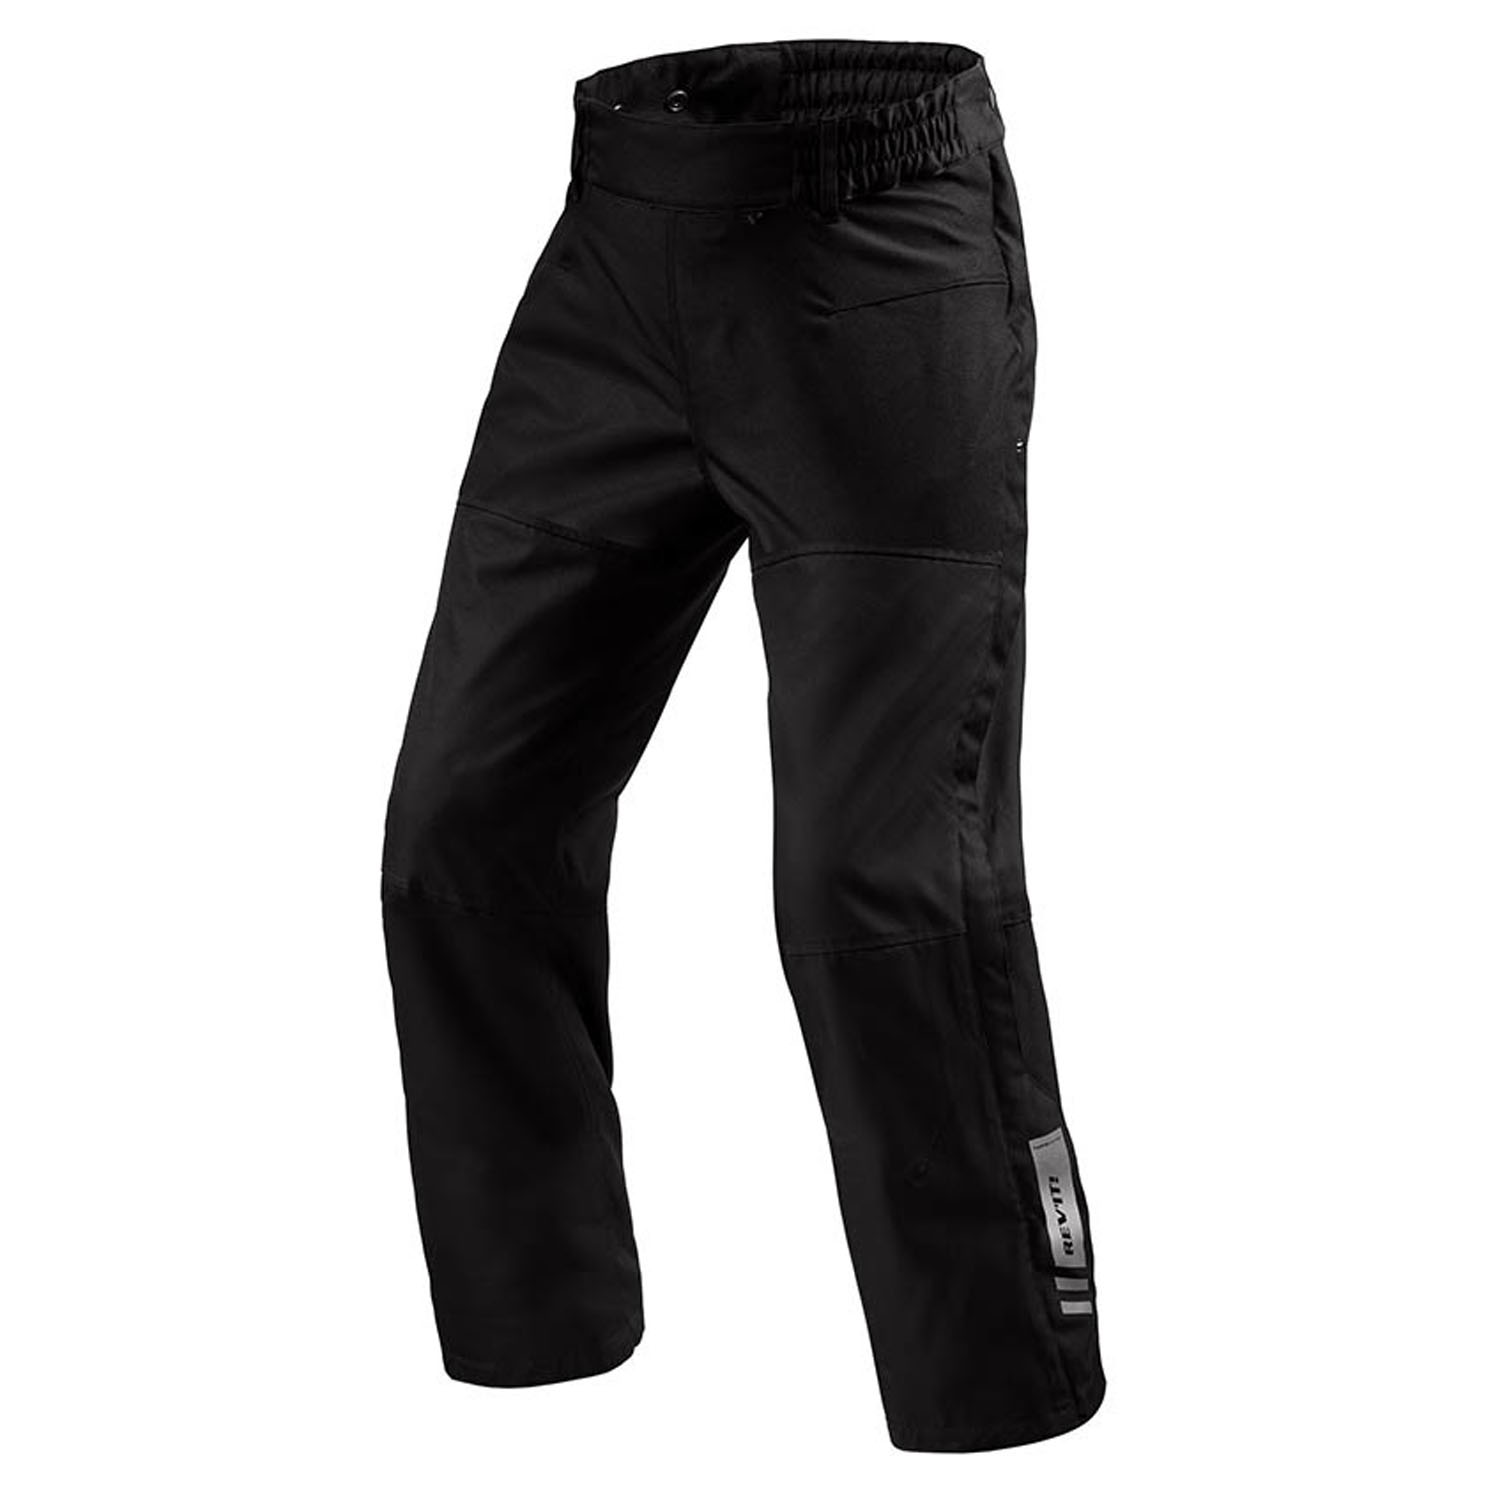 Image of REV'IT! Pants Axis 2 H2O Black Long Motorcycle Pants Größe 2XL